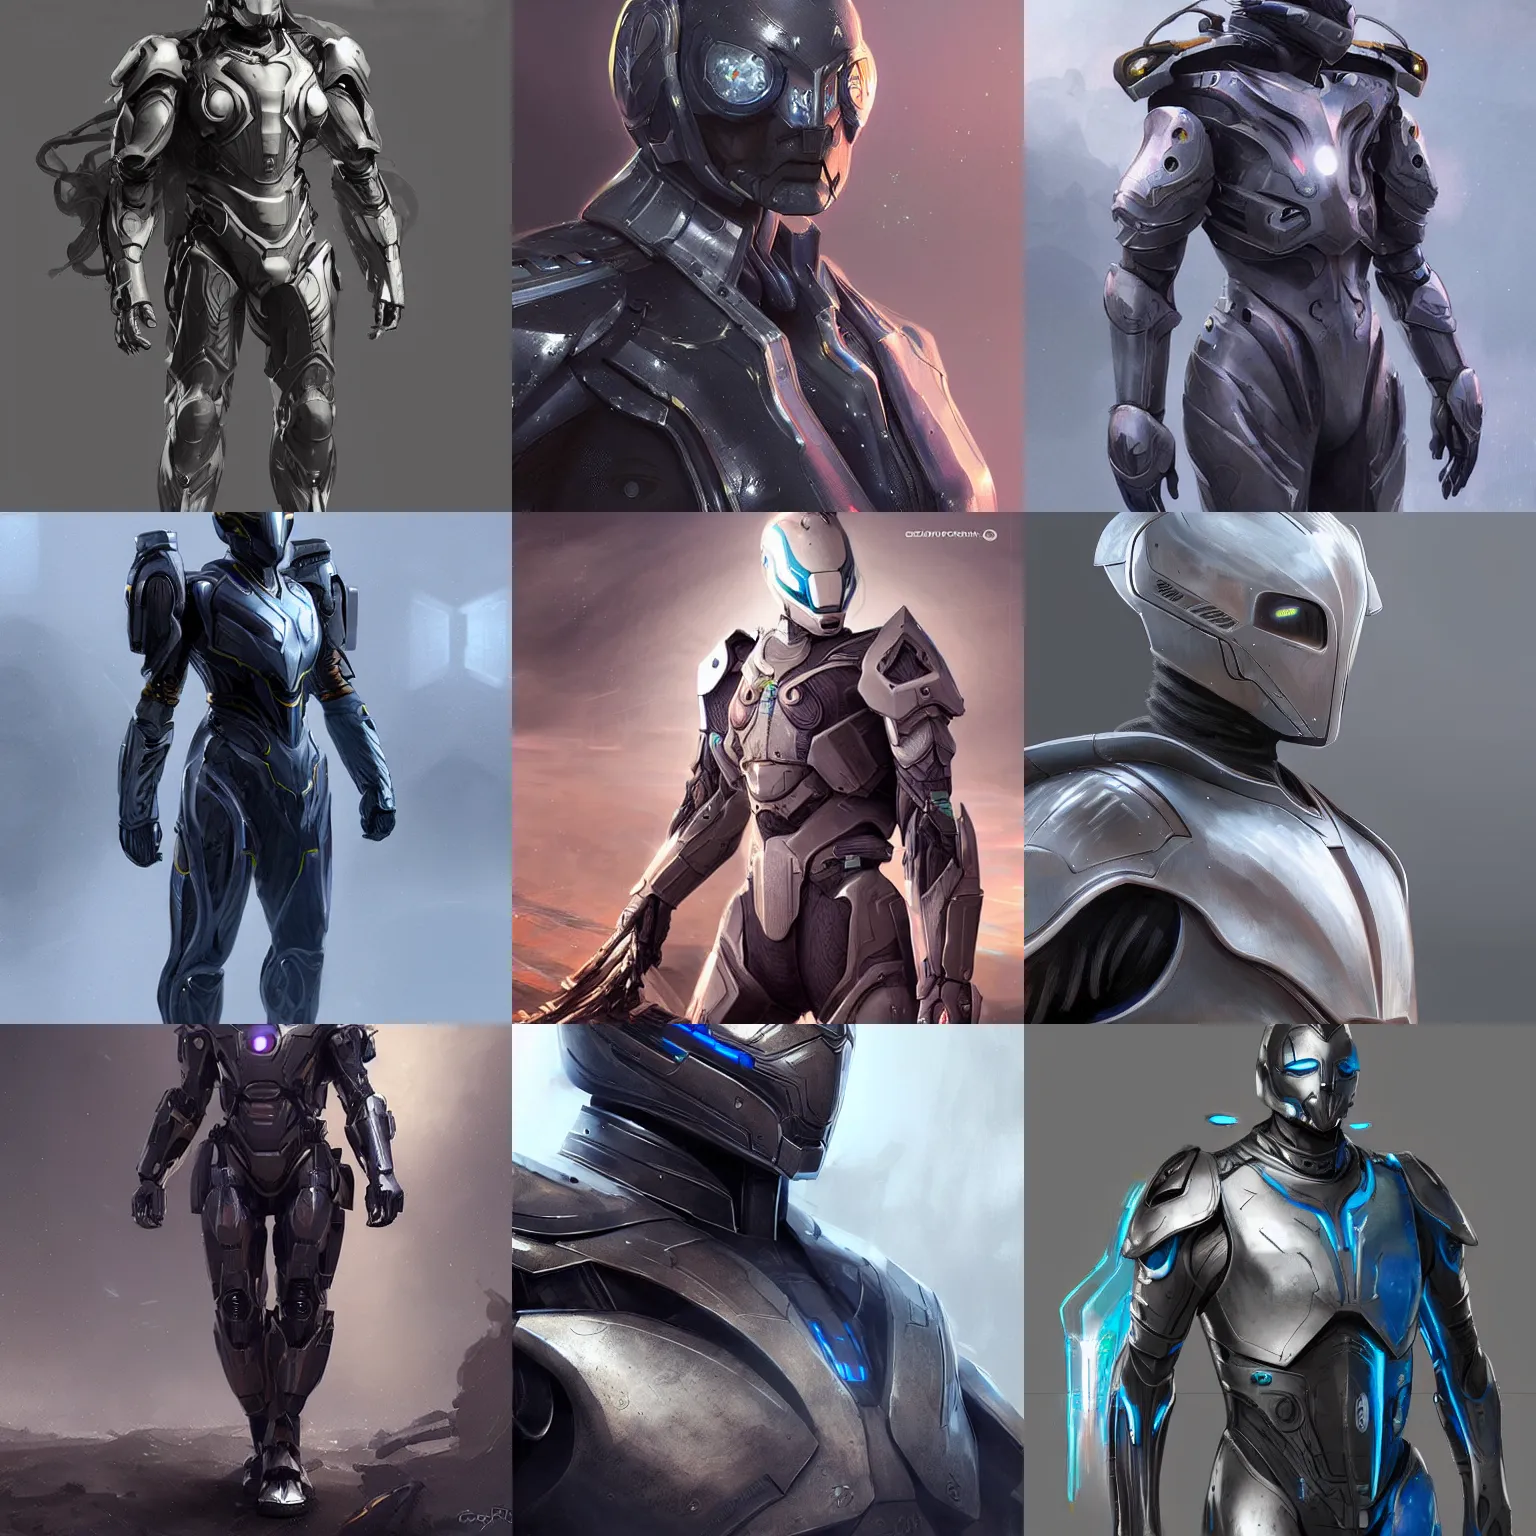 Prompt: mystical sci-fi super hero armor suit, hyper realistic, 4k, detailed concept art by Cedric Peyravernay